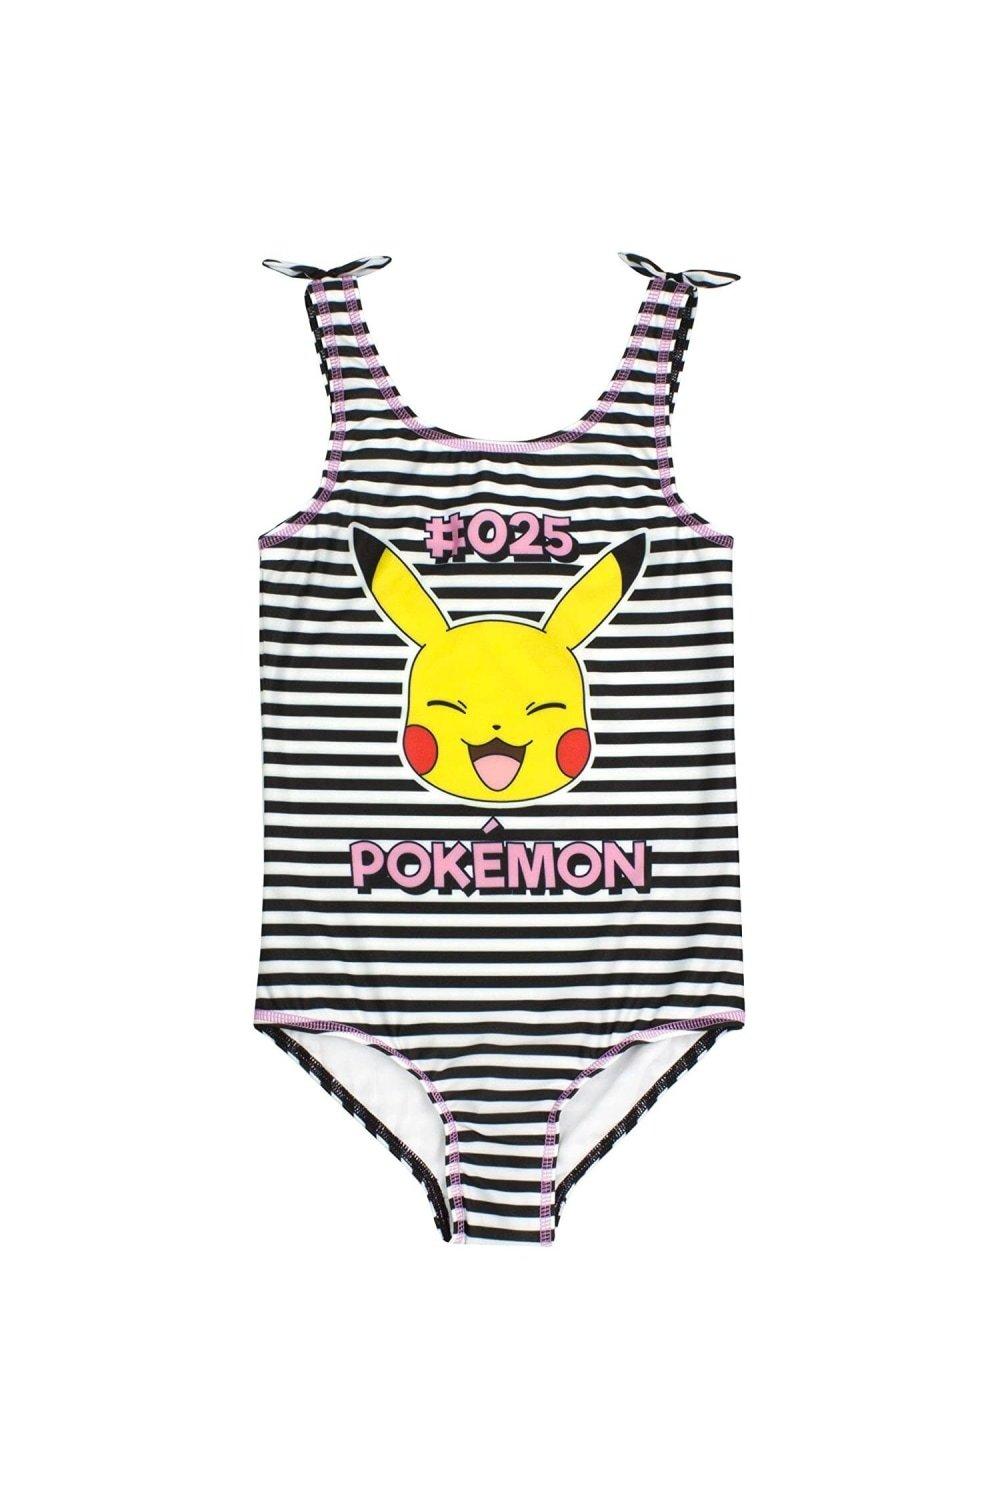 Pikachu One Piece Swimsuit